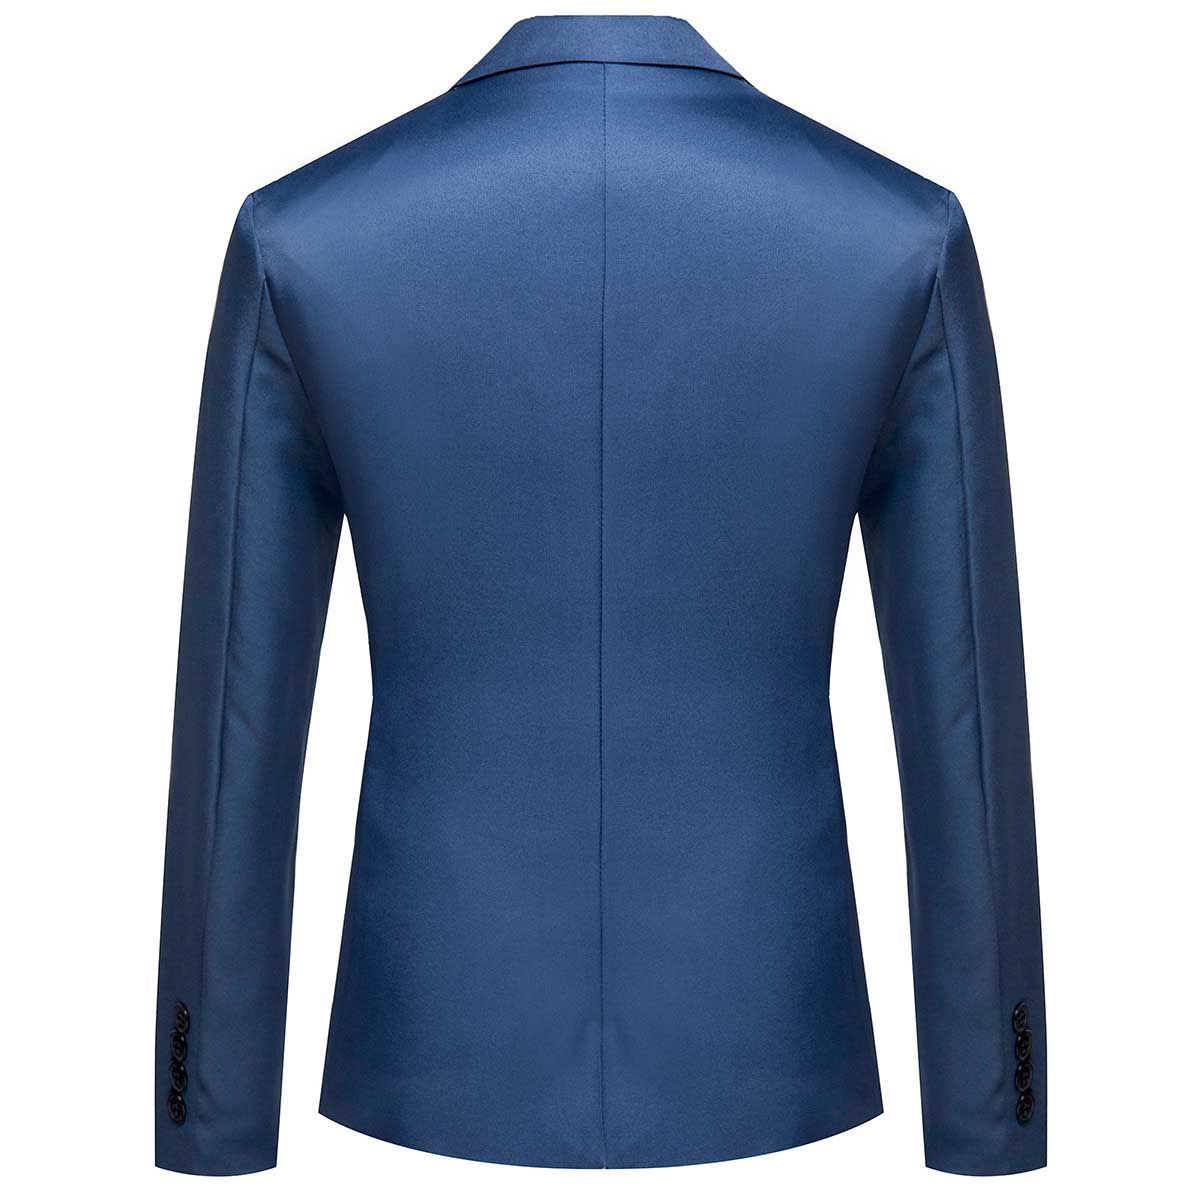 Men's Casual Suit Jacket Slim Fit Lightweight Blazer Coat Blue